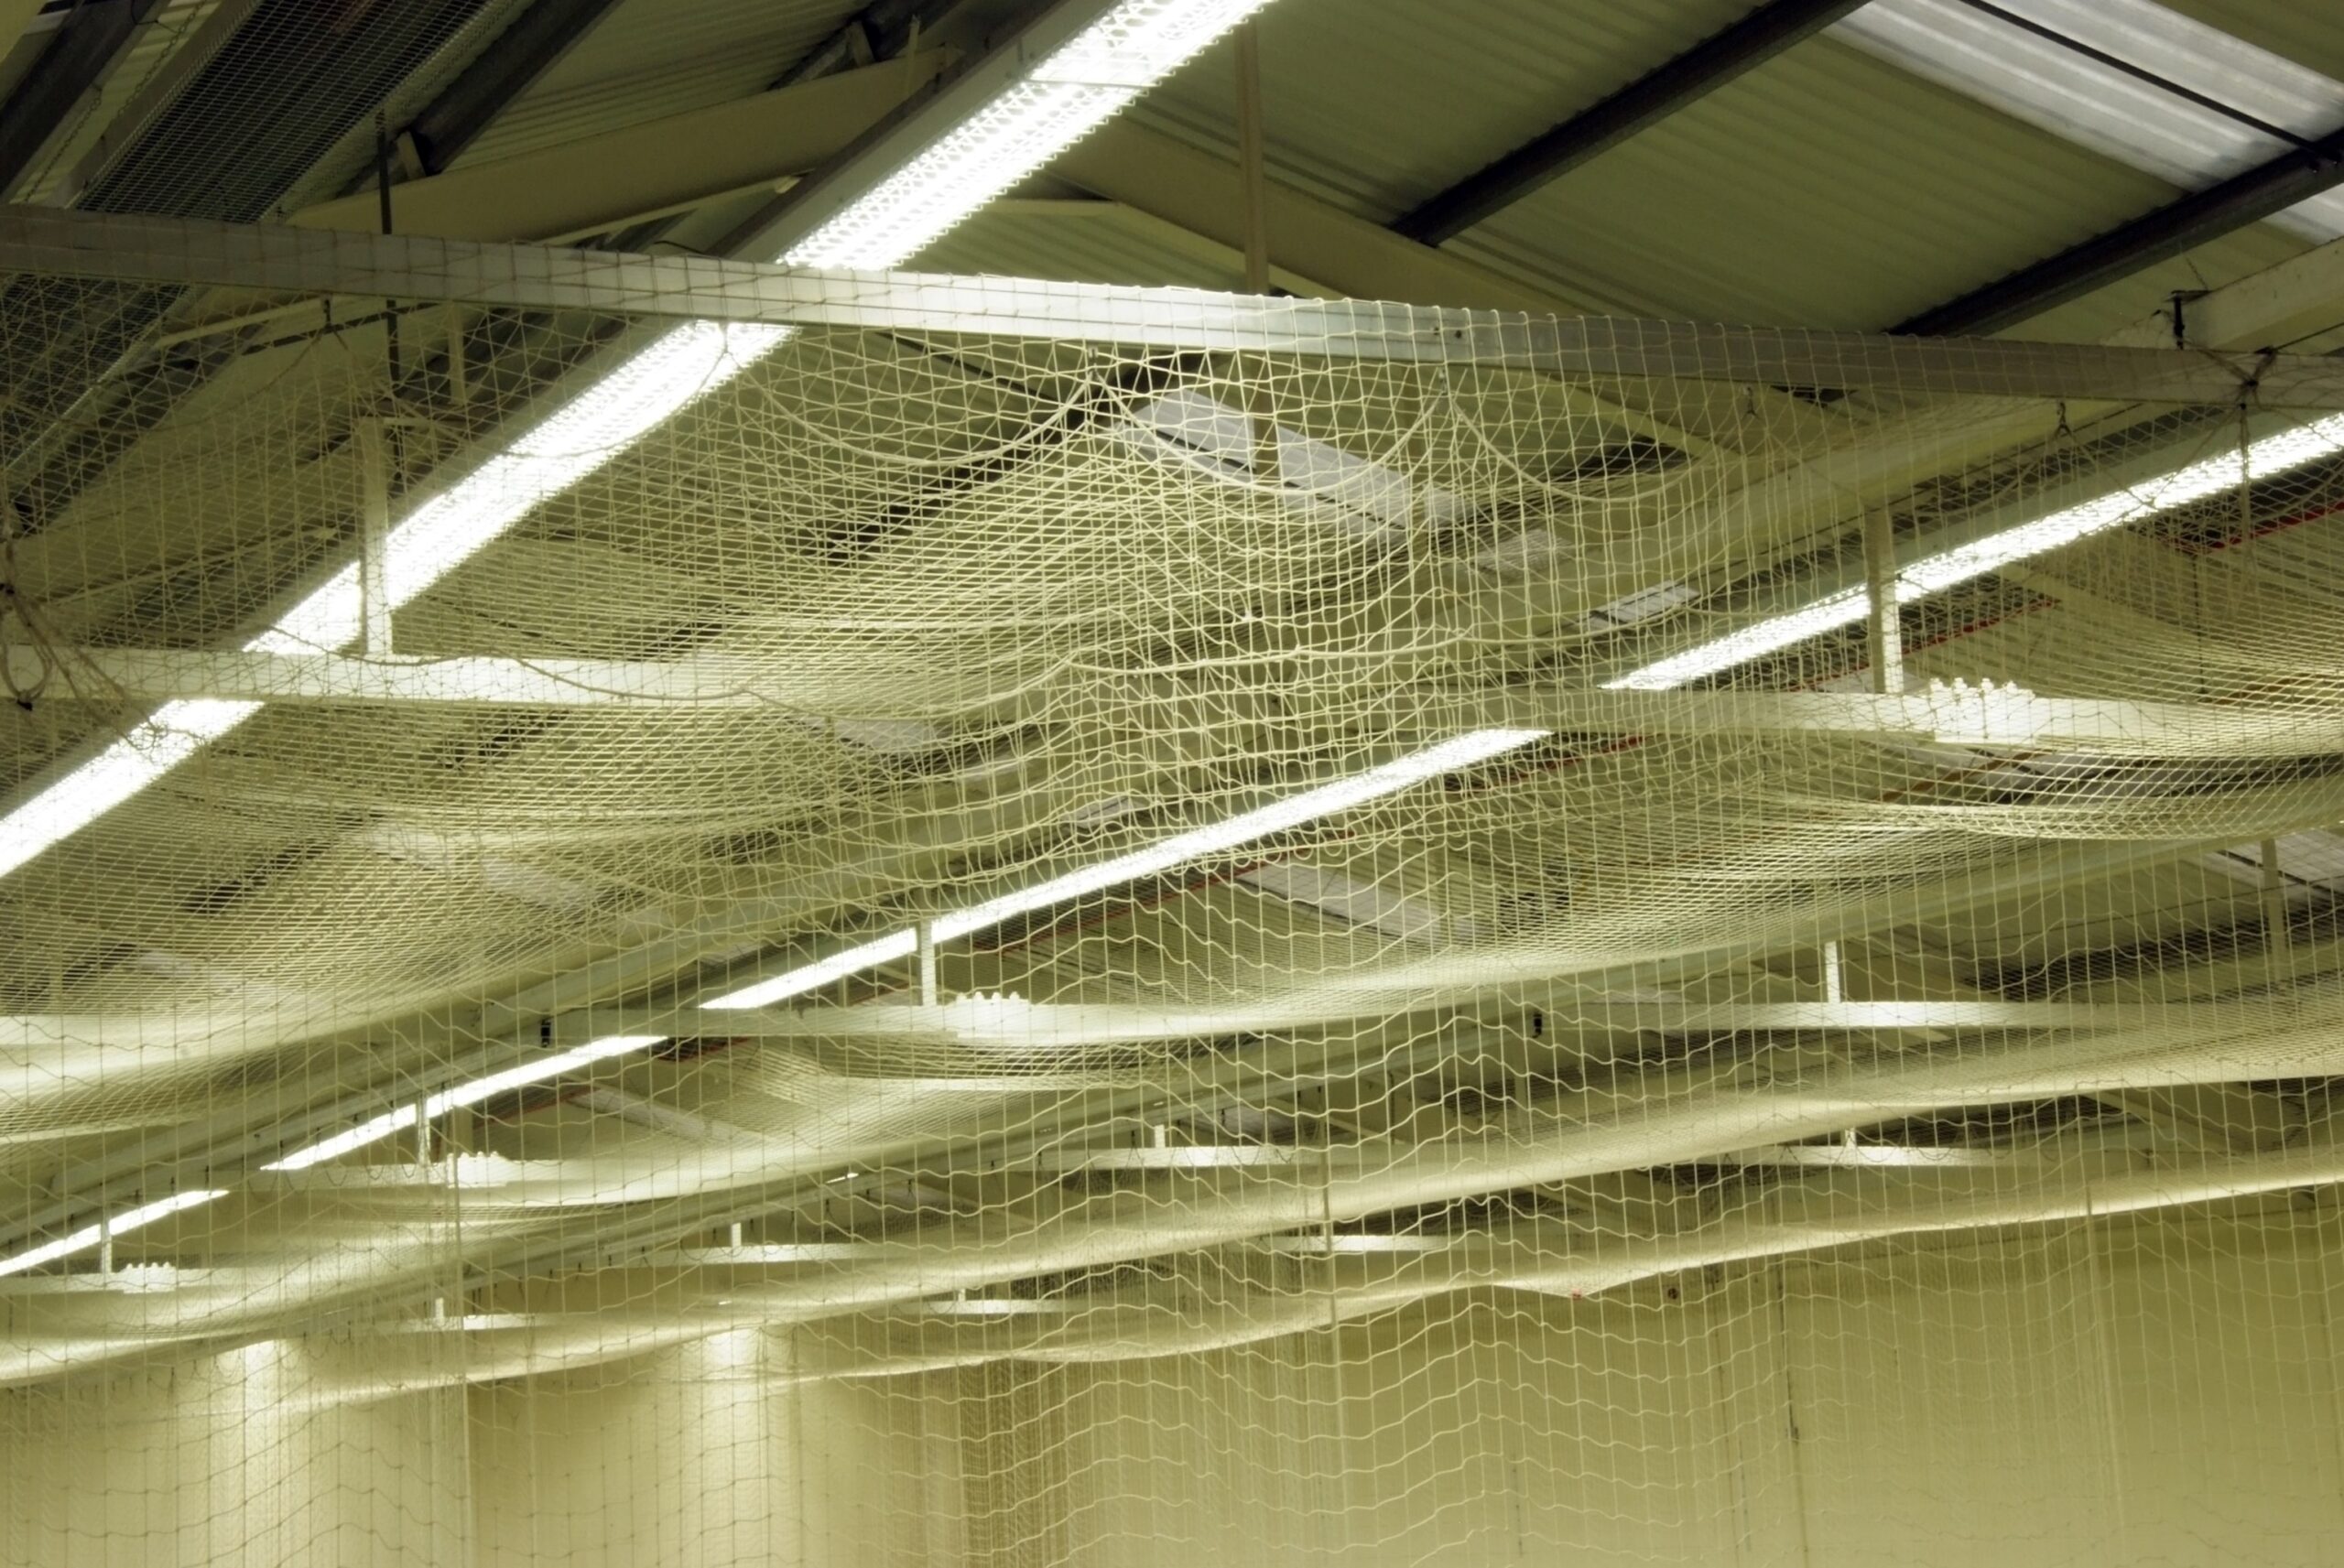 Tamlite Sheffield Hallam University lighting netting